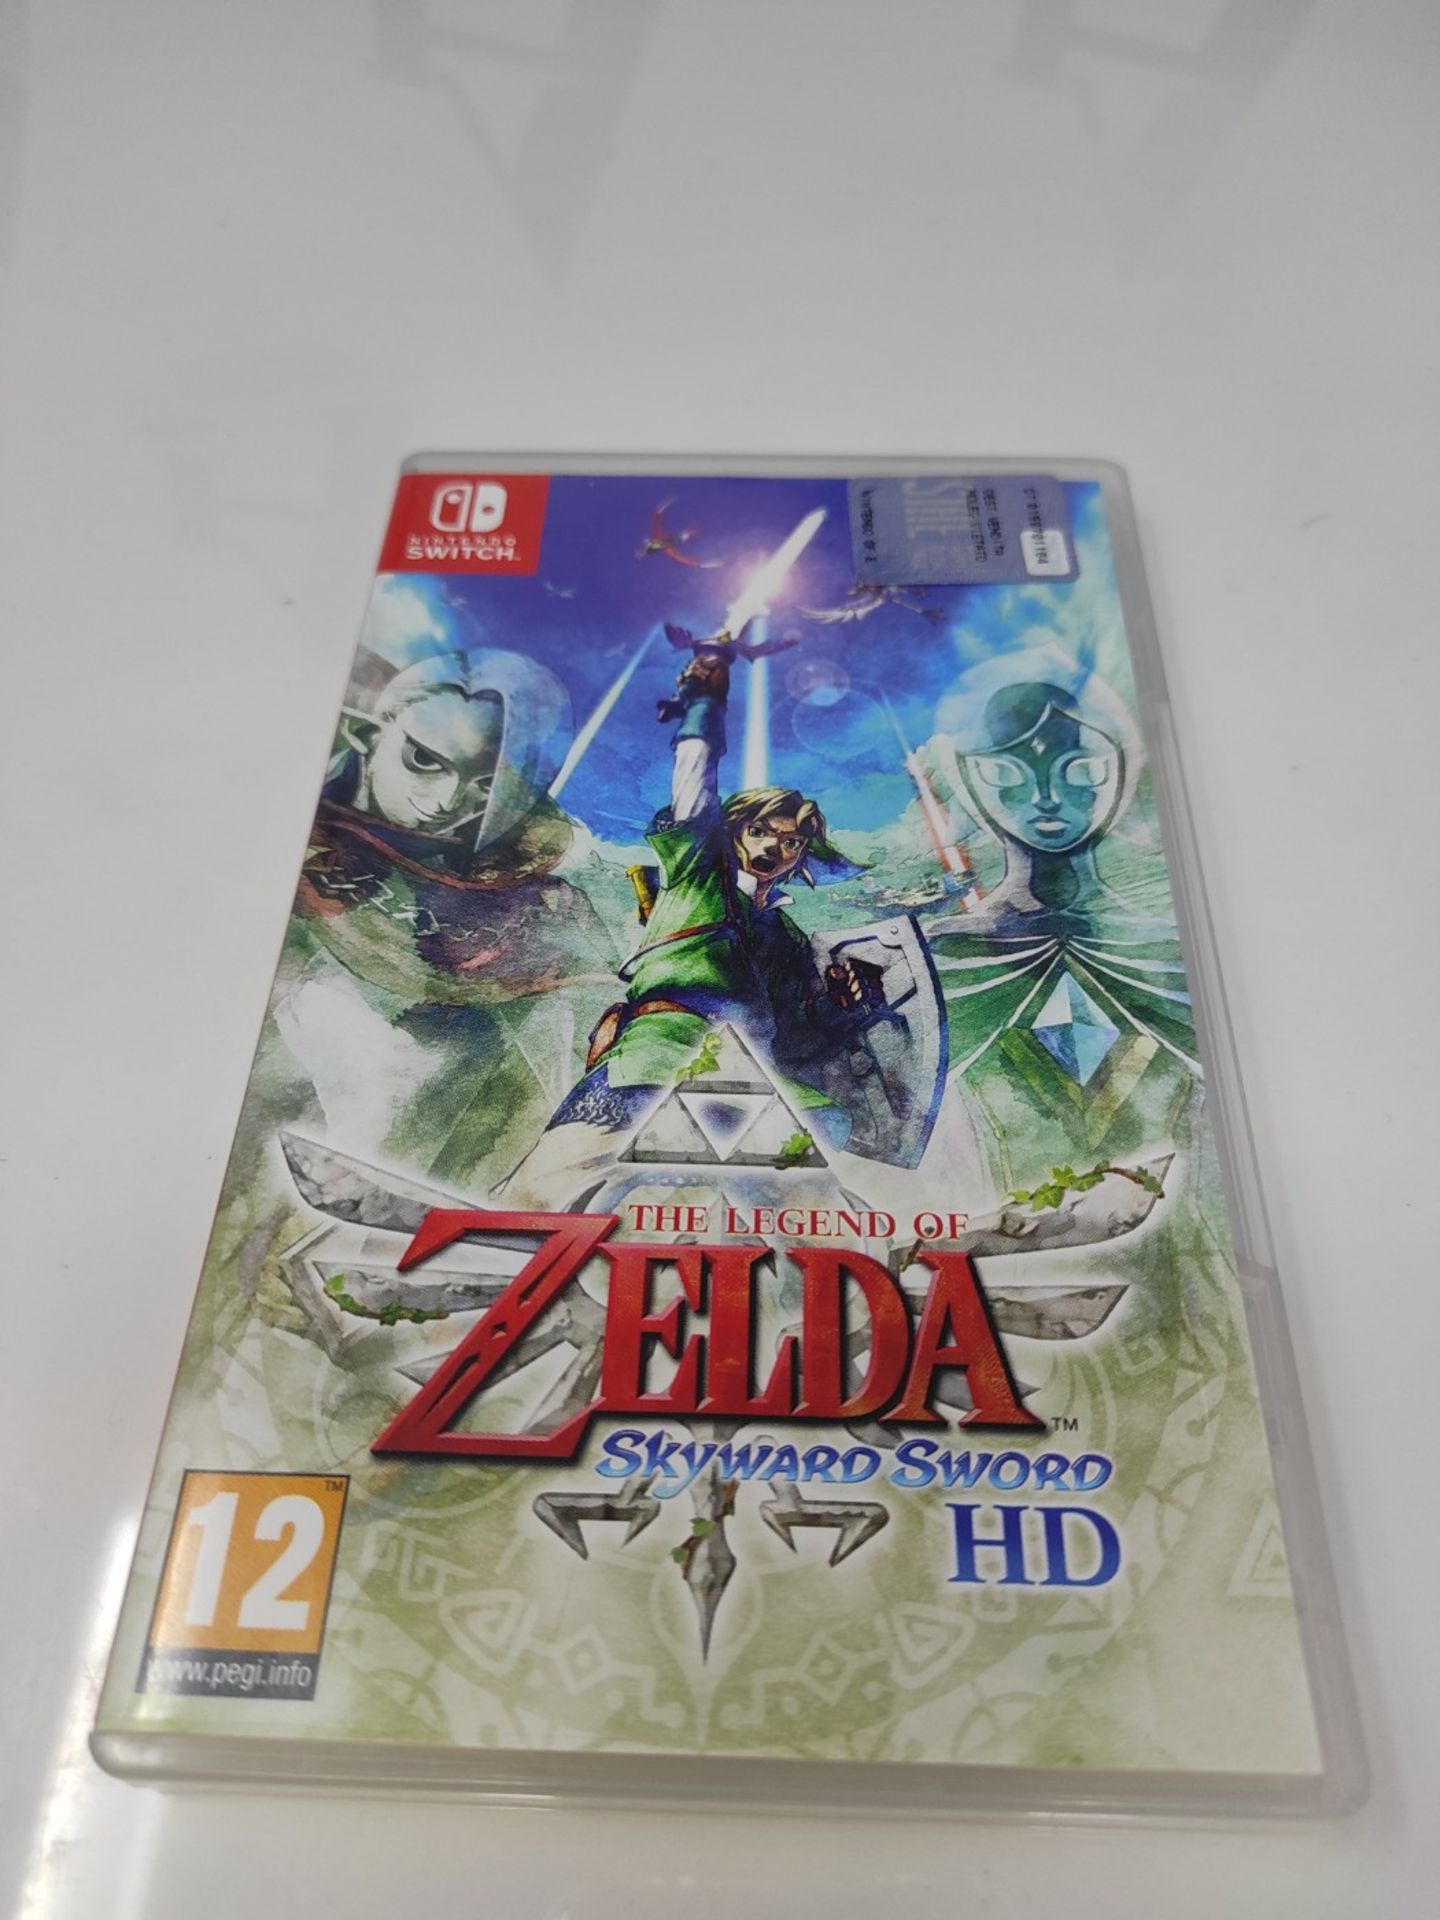 The Legend of Zelda: Skyward Sword - HD - Nintendo Video Game - Italian Edition - Cart - Image 5 of 6